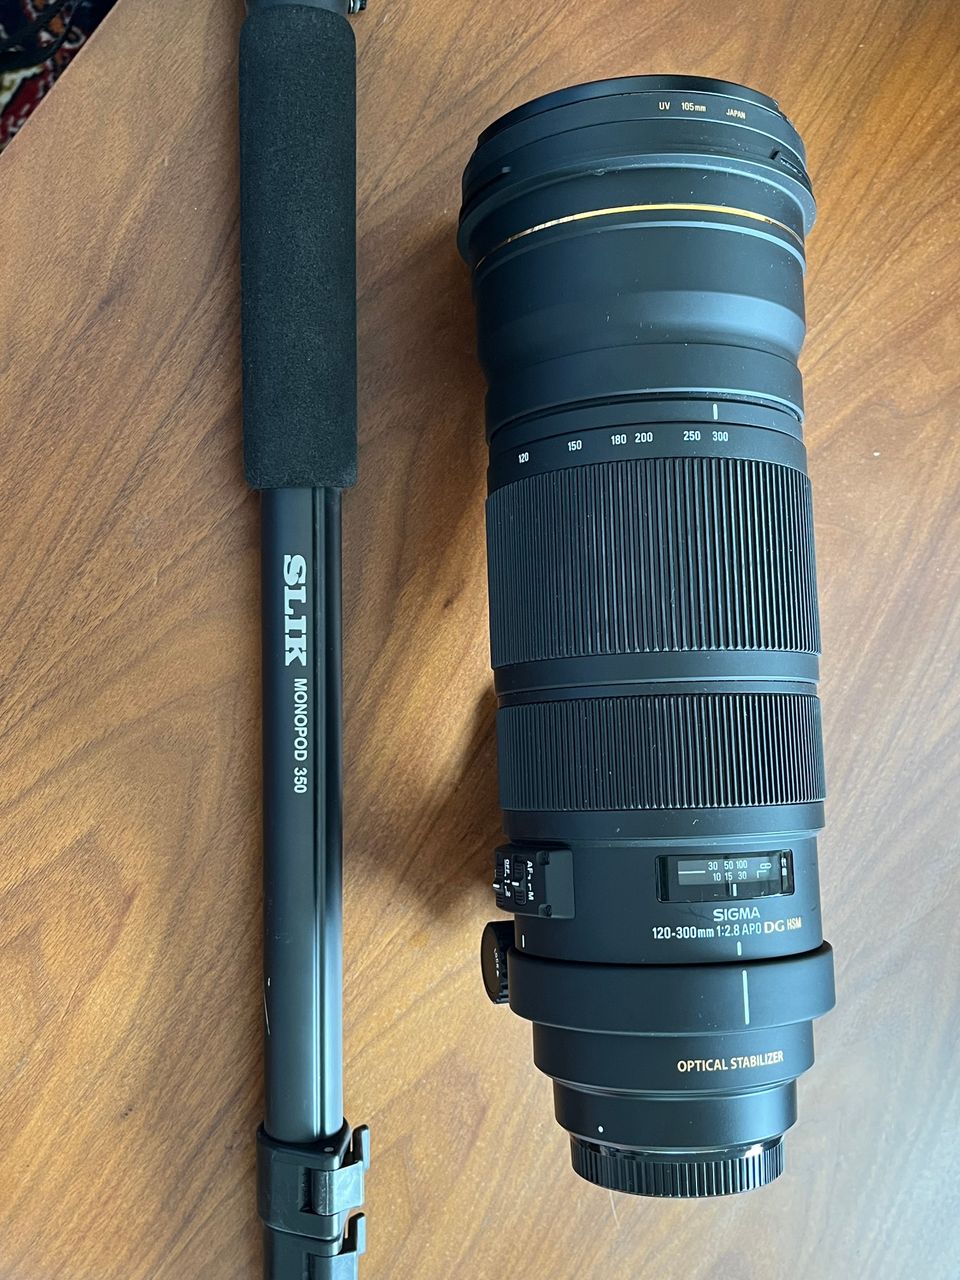 Sigma 120-300mm f/2.8 S DG OS HSM lens, Canon